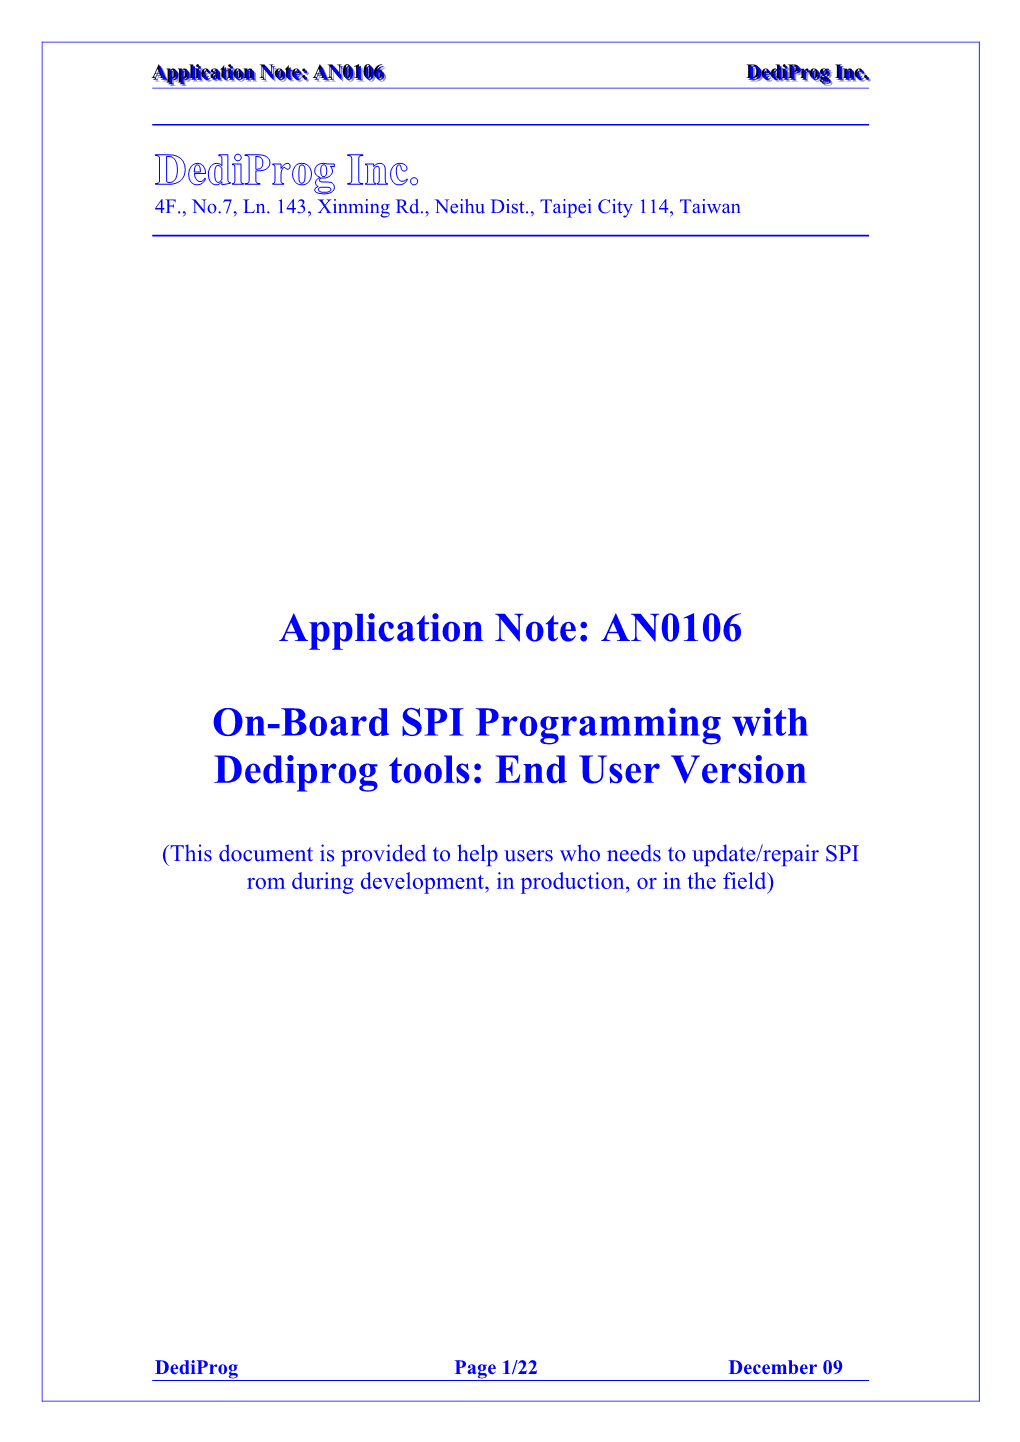 AN0106 On-Board SPI Programming with Dediprog Tools: End User Version